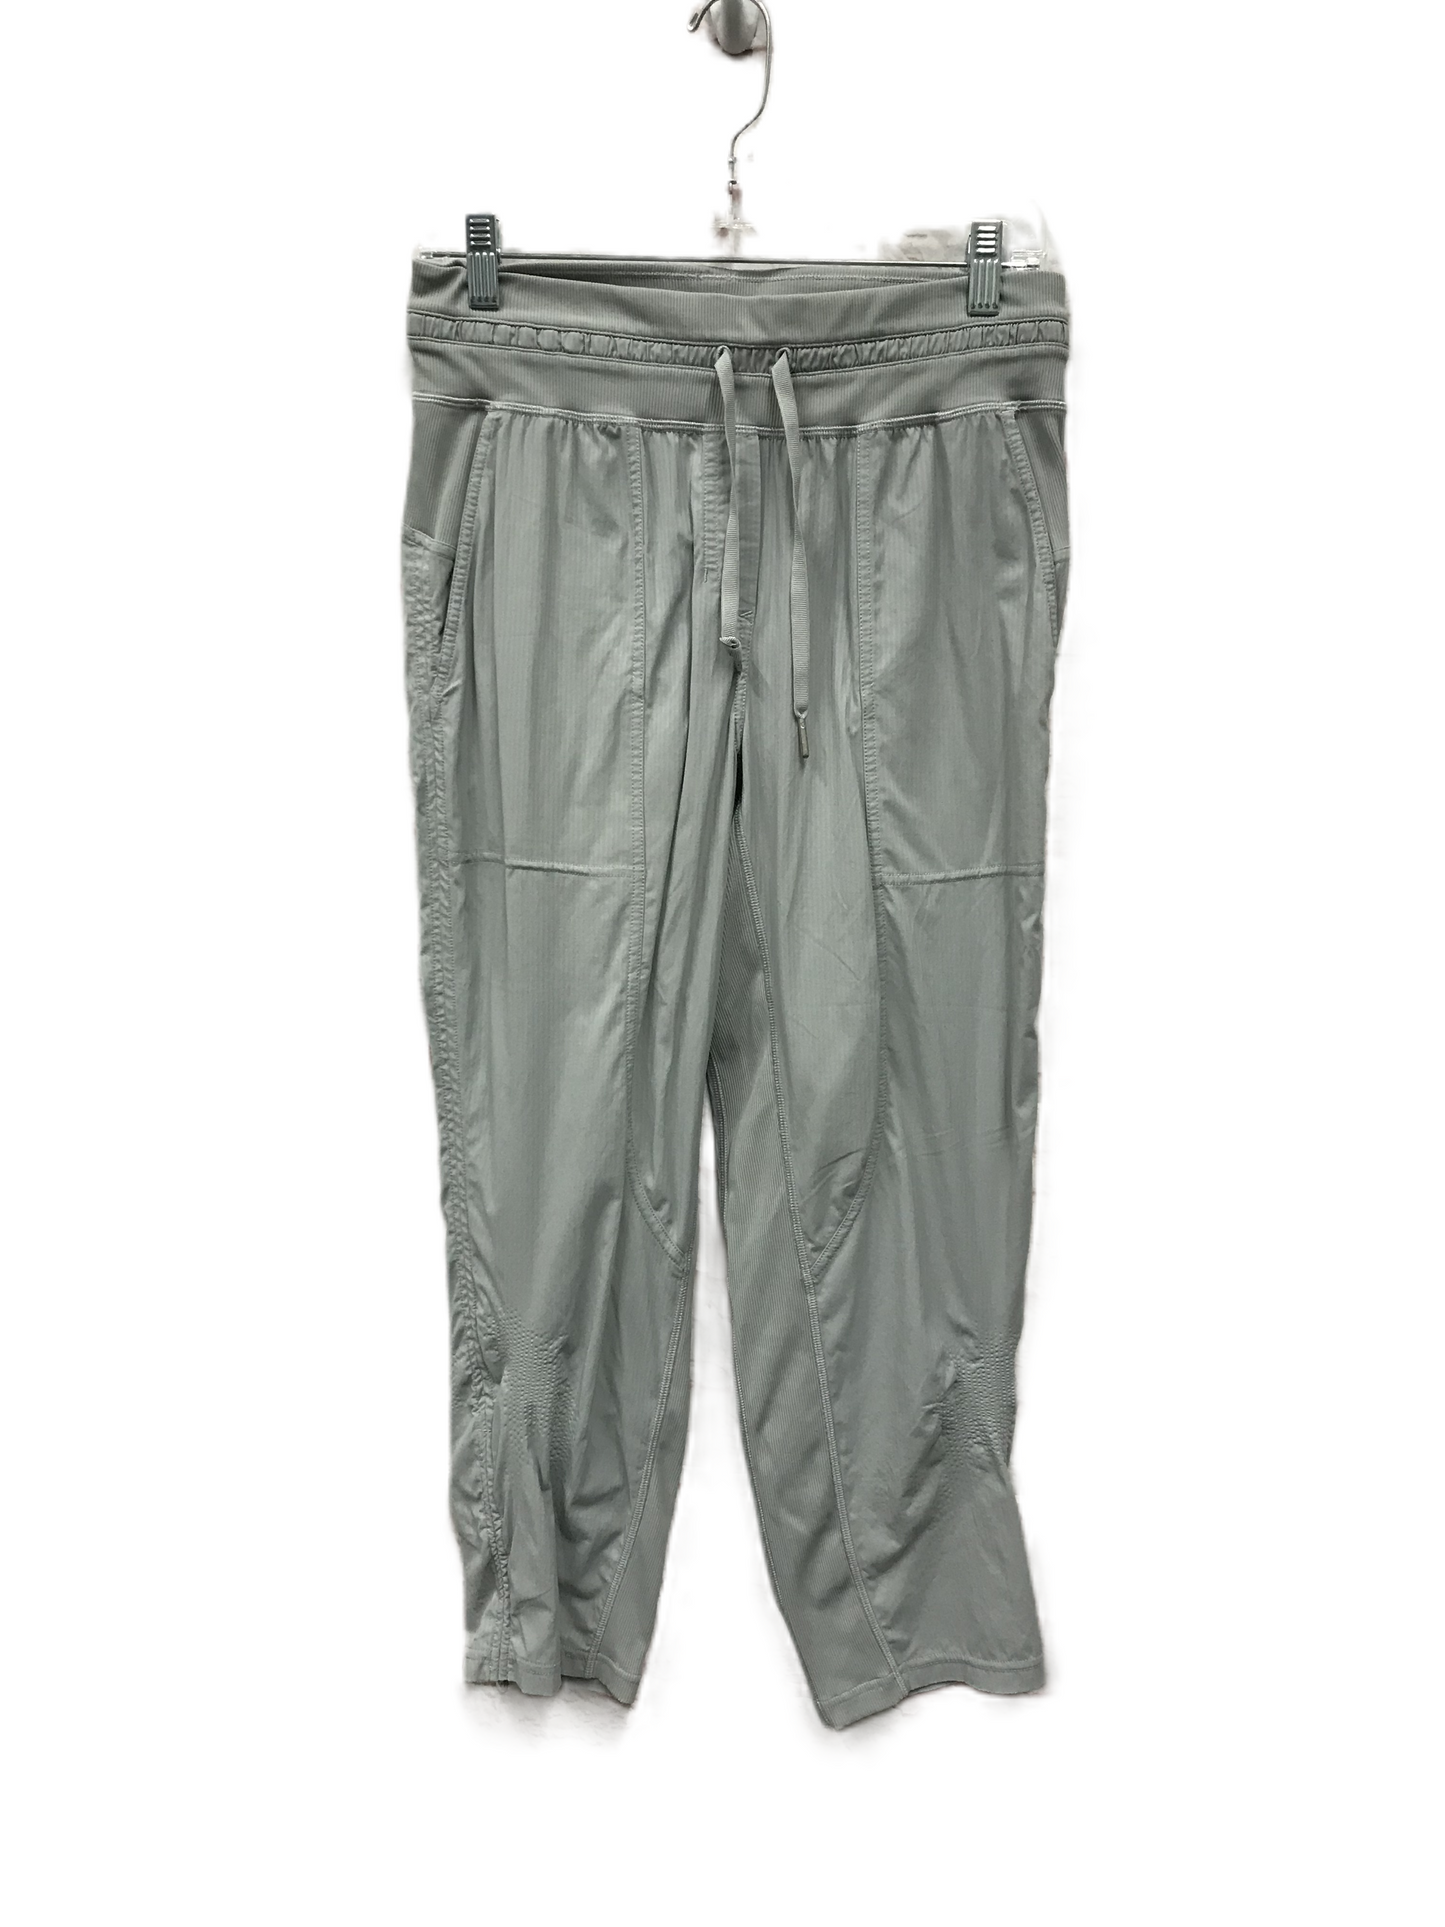 Grey Athletic Pants By Lululemon, Size: 6